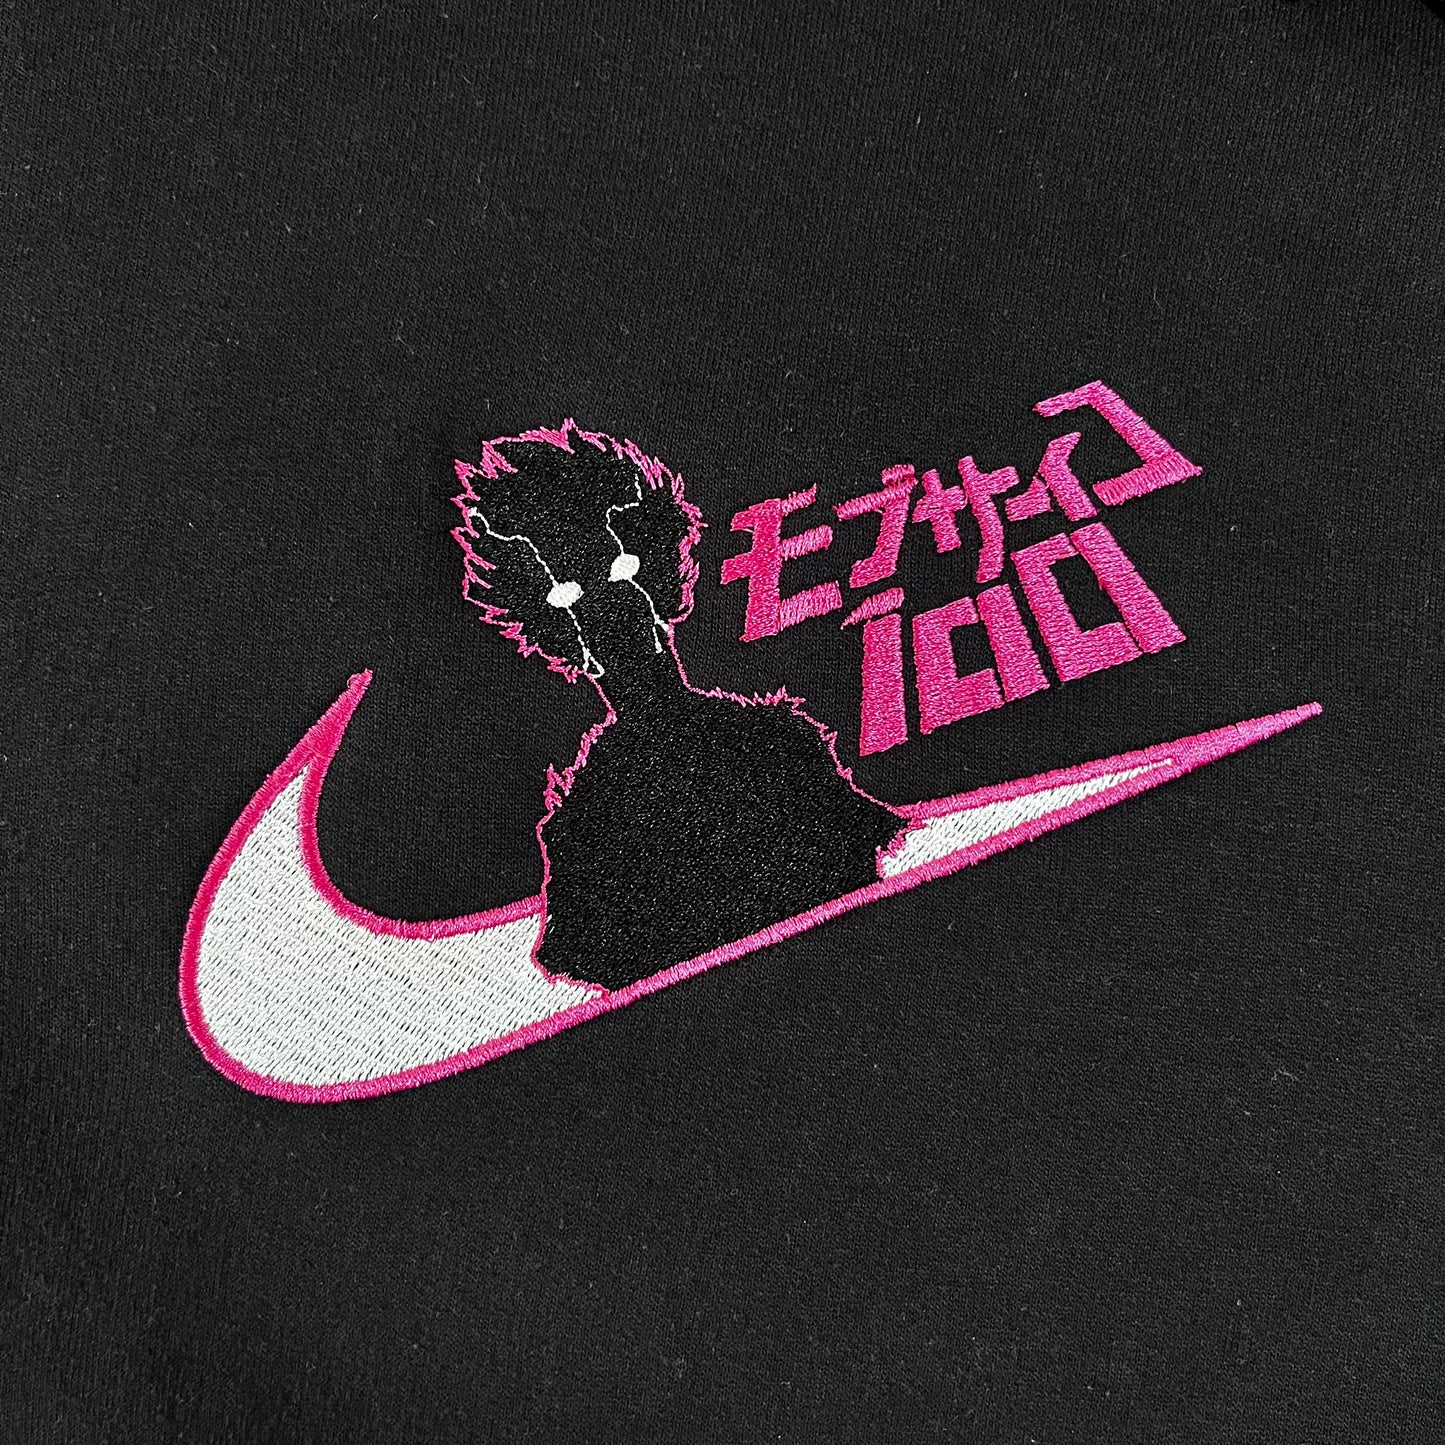 Nike x Mob 100% Embroidery (Mob Psycho100)